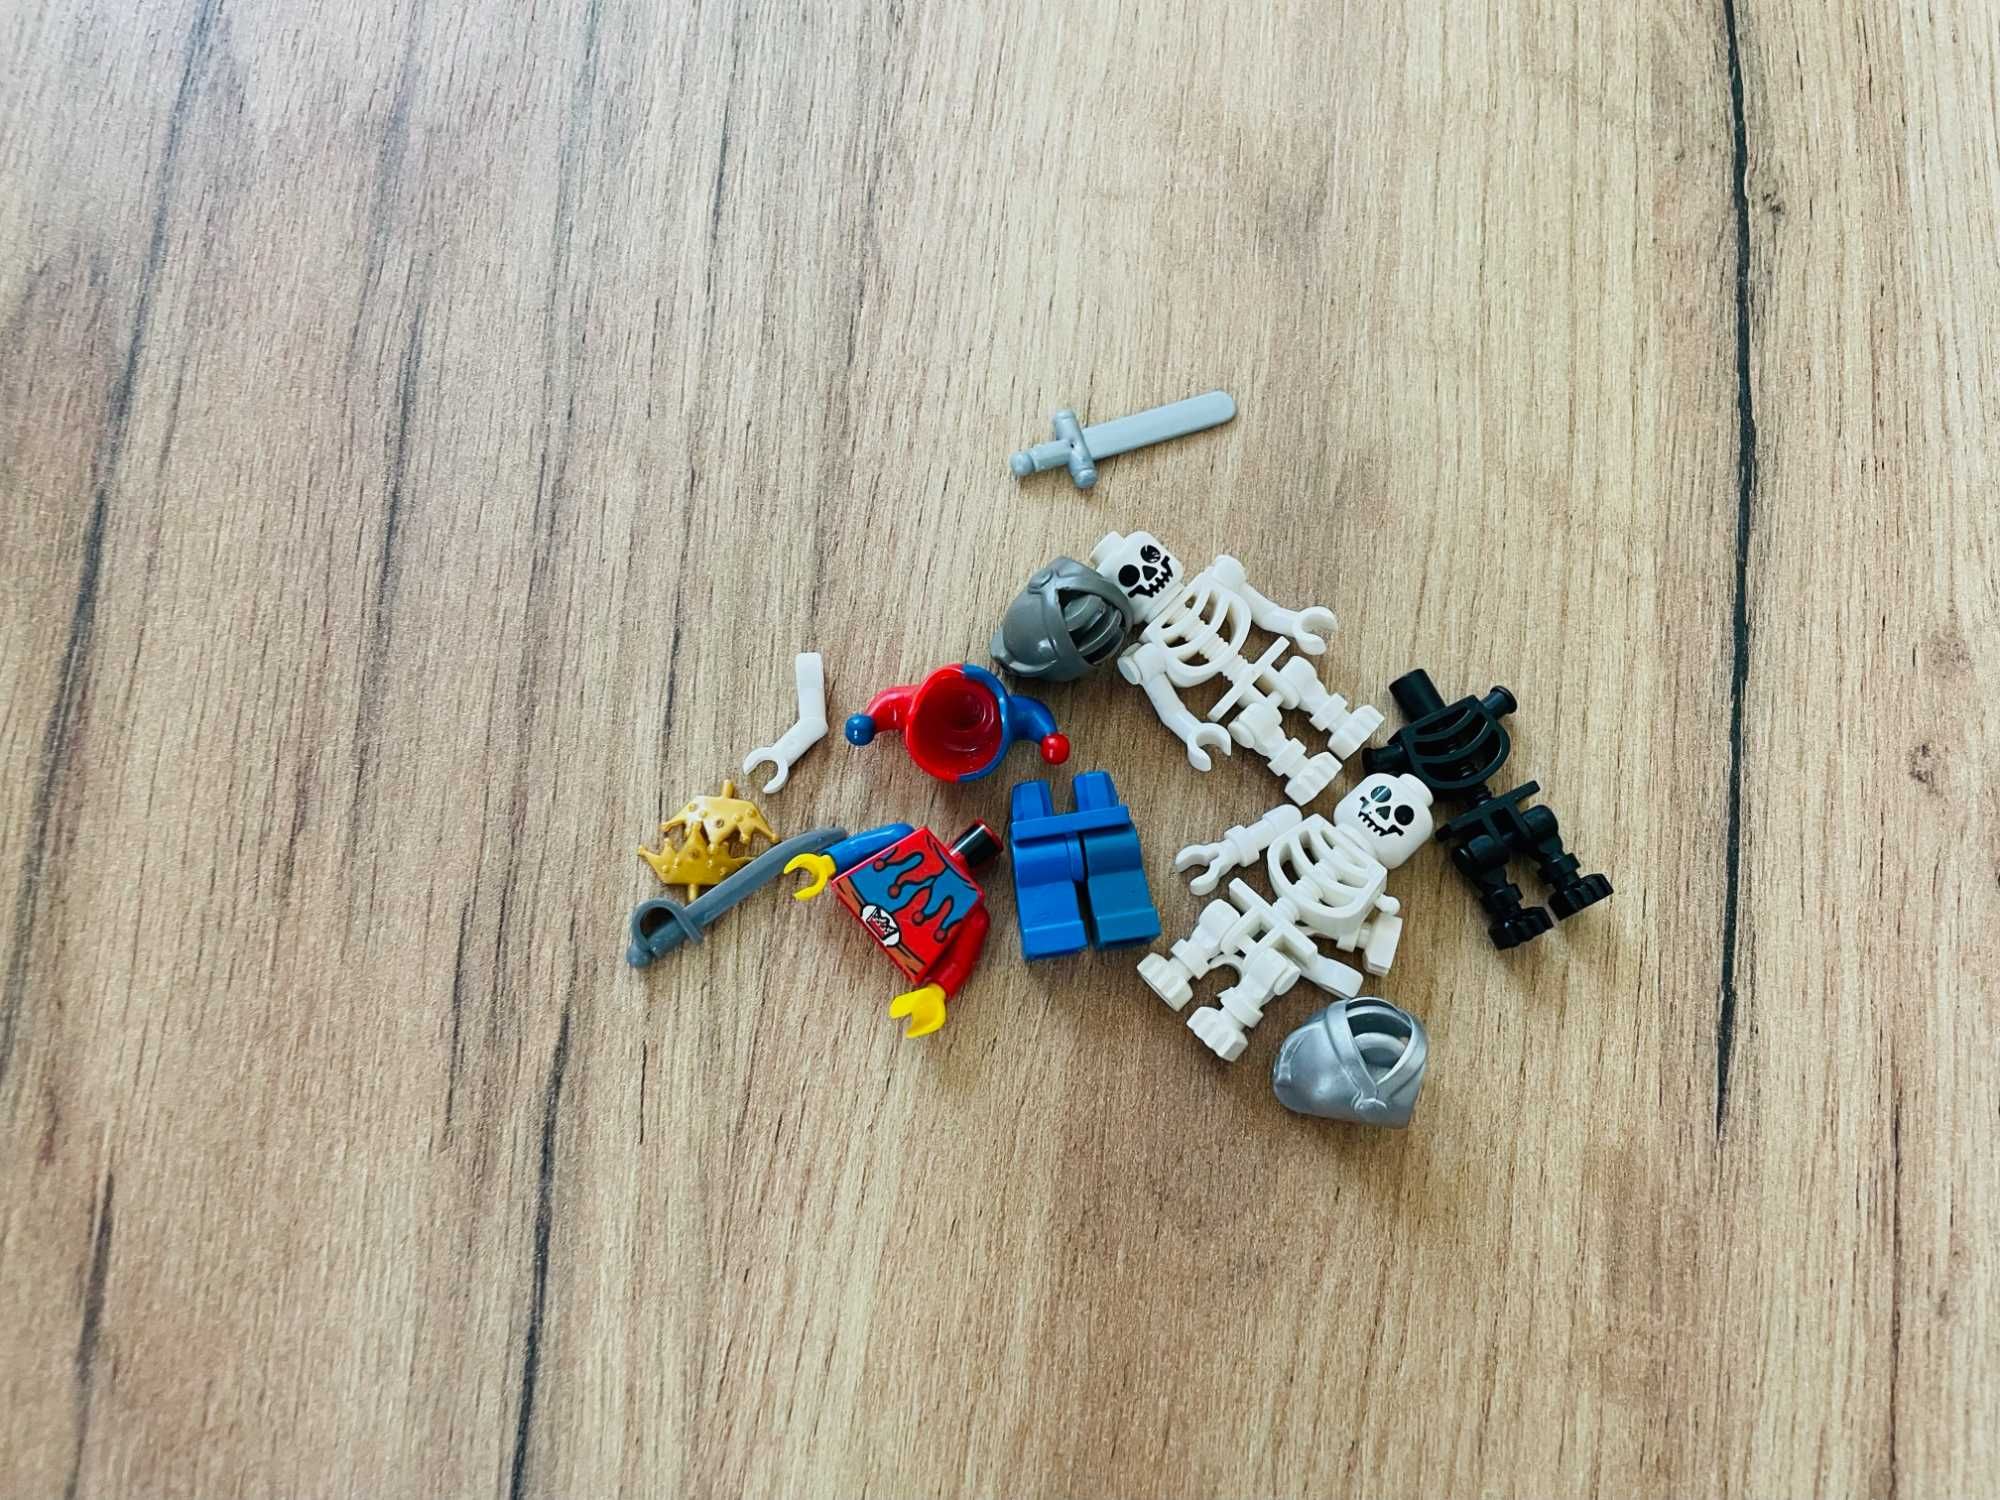 LEGO Castle 7079 - Obrona Mostu Zwodzonego